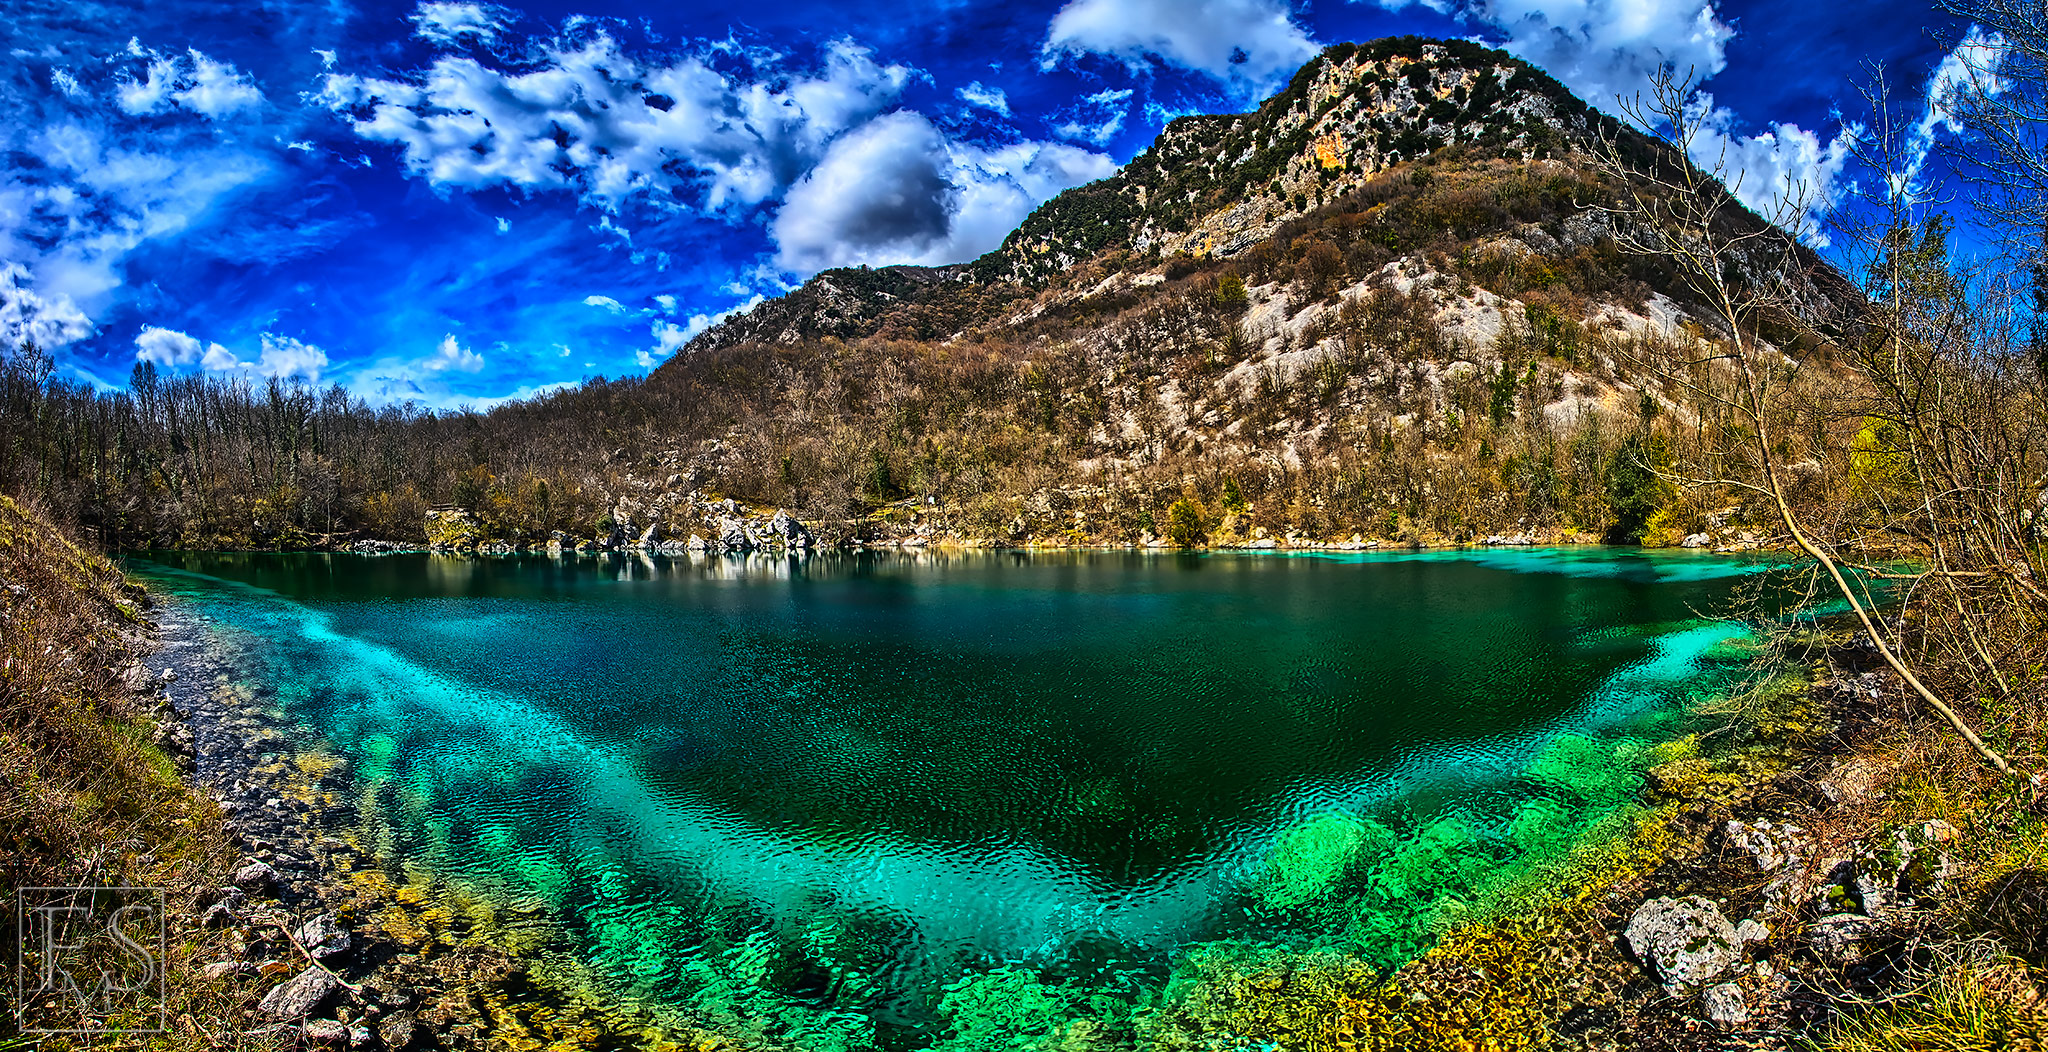 The Clear Green Lake